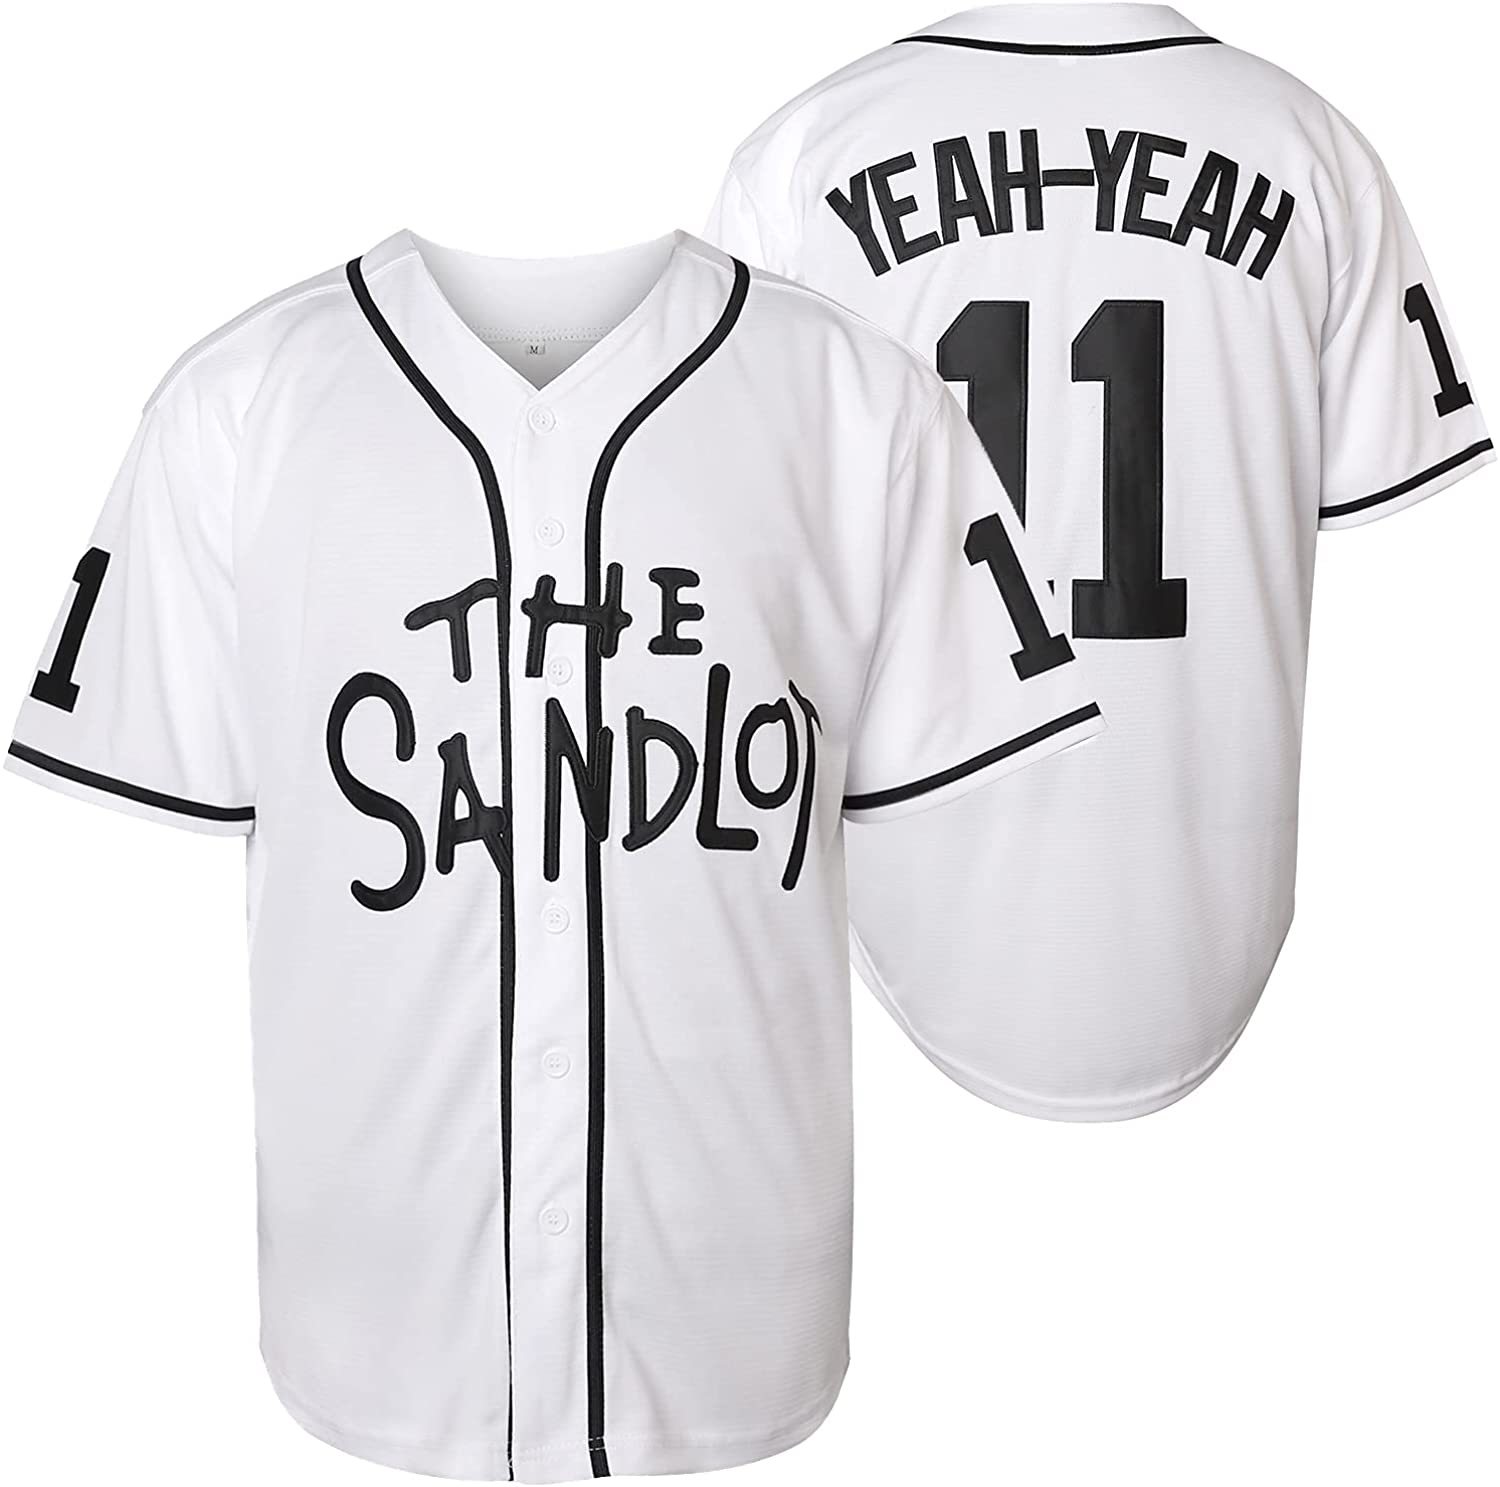 Alan Yeah-Yeah McClennan #11 The Sandlot Movie Baseball Jersey New White